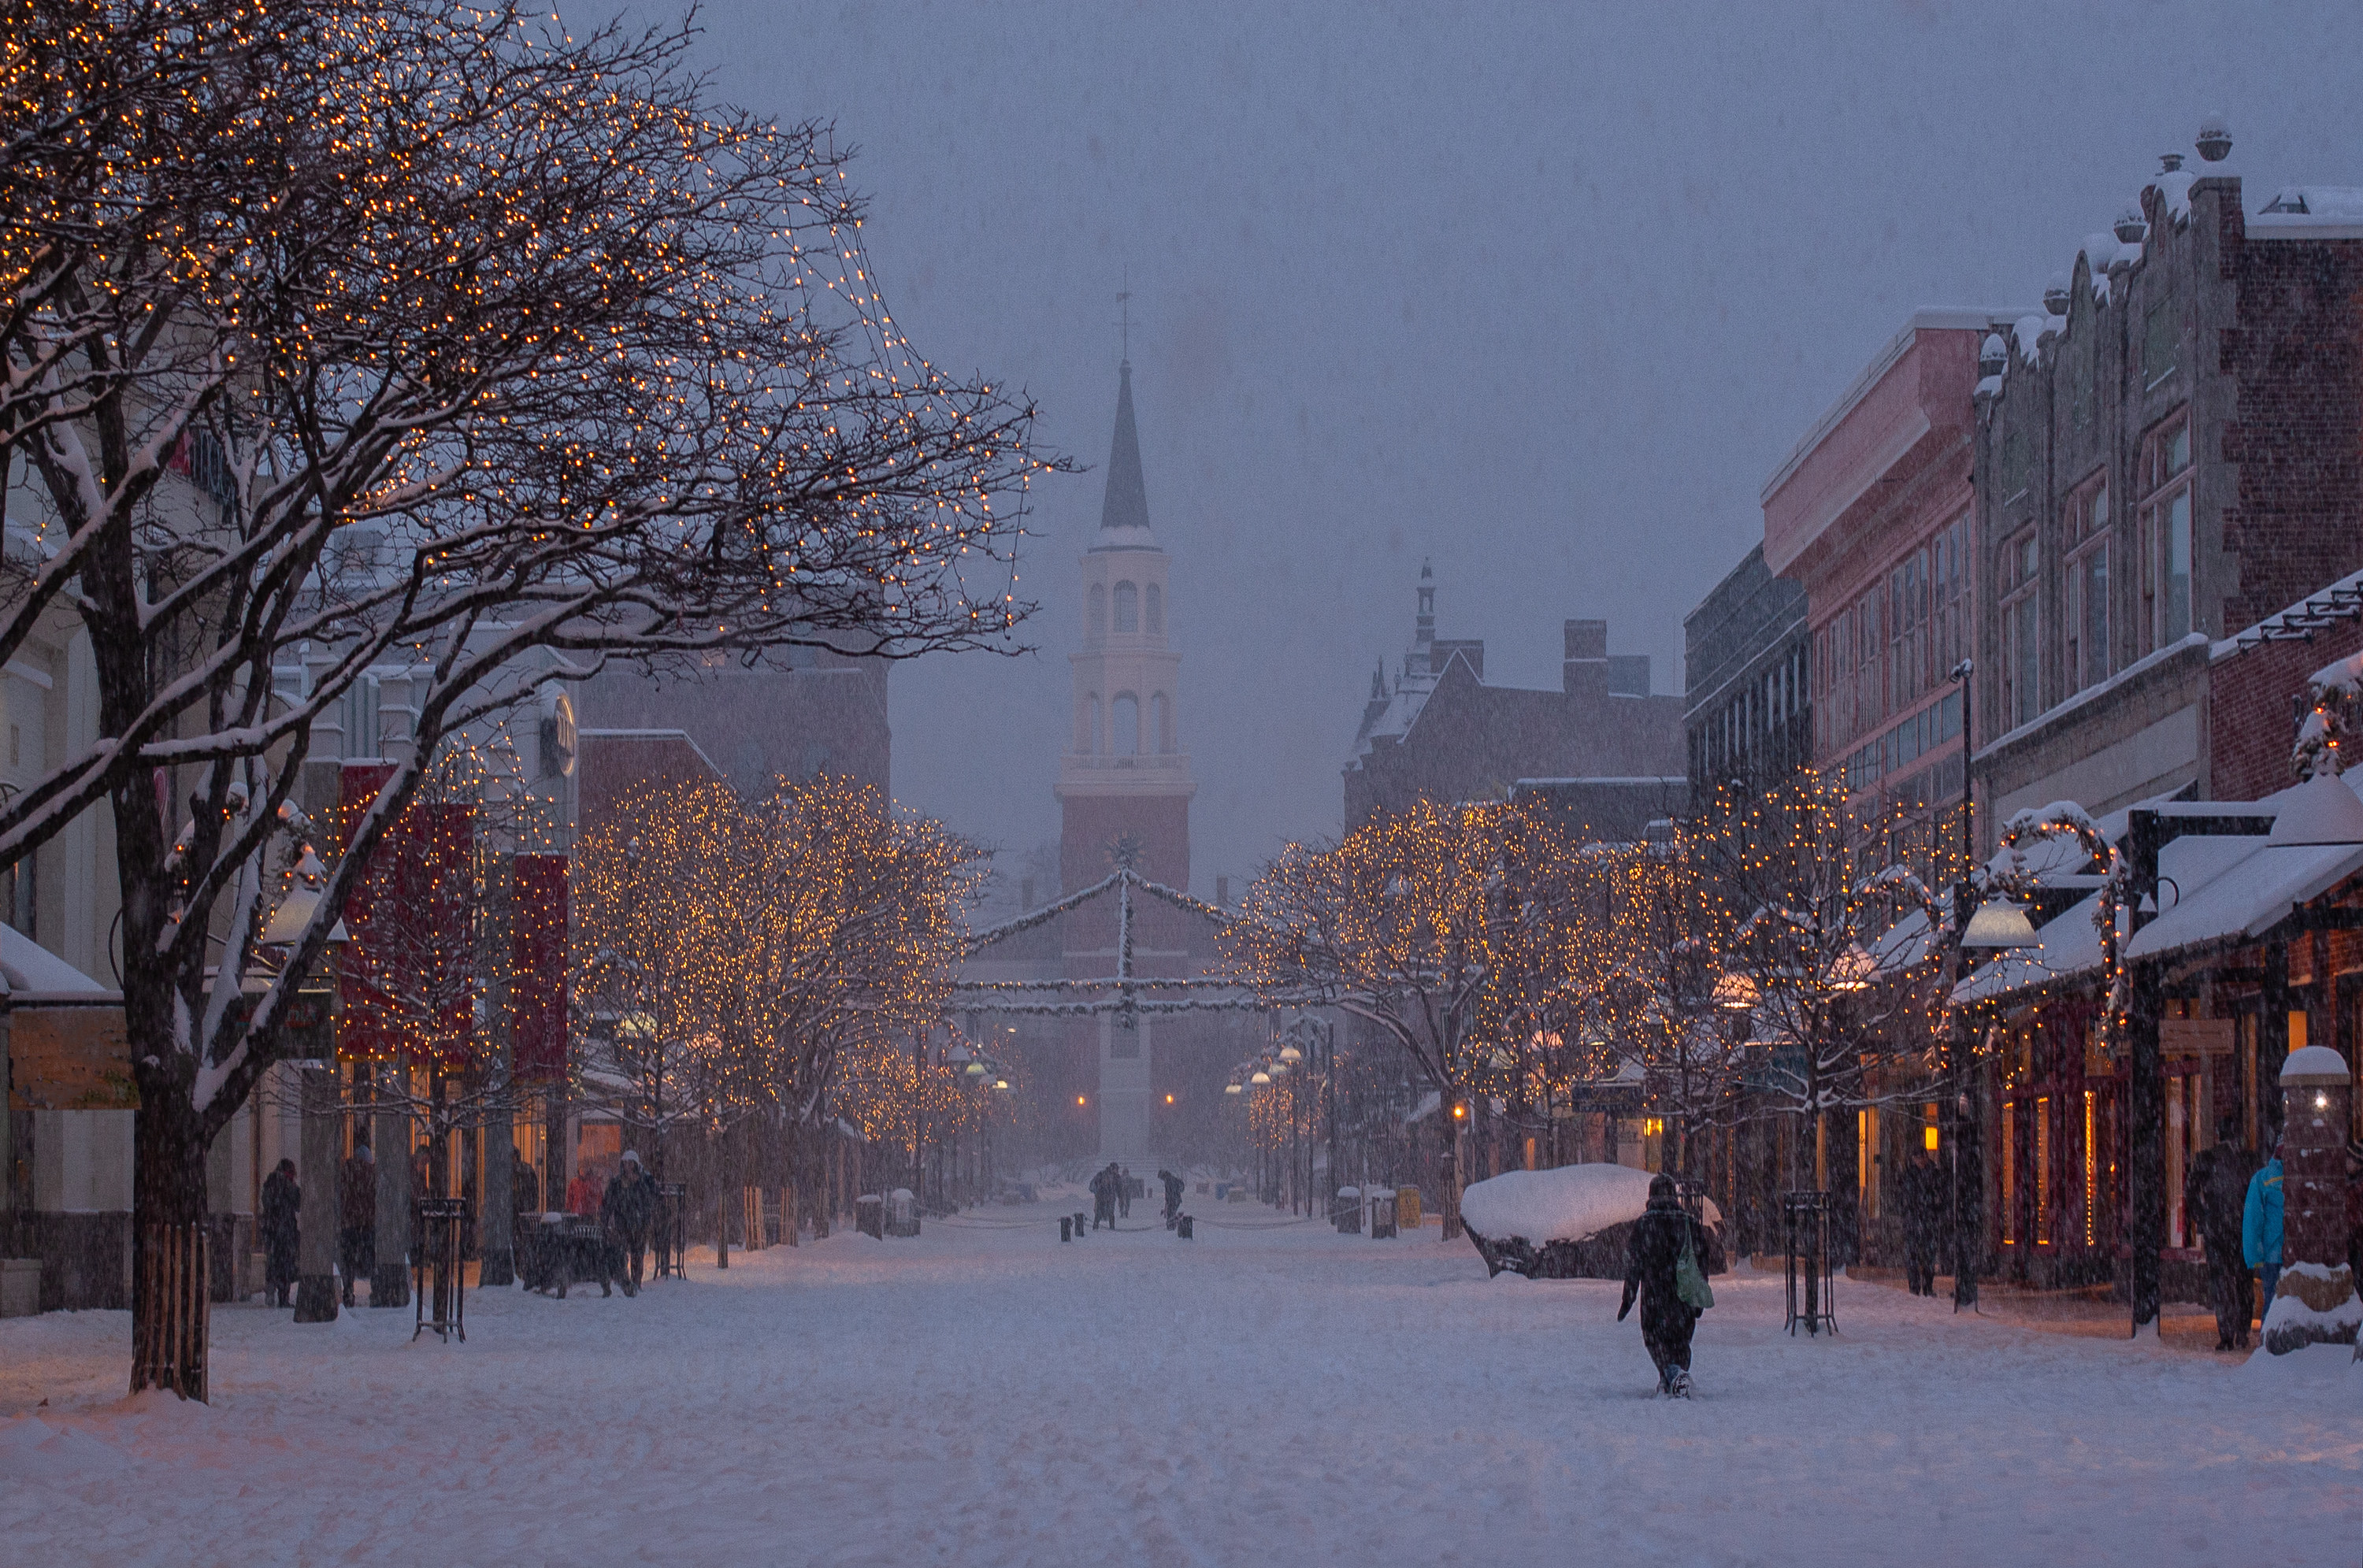 Evening snowfall in downtown Burlington, Vermont.